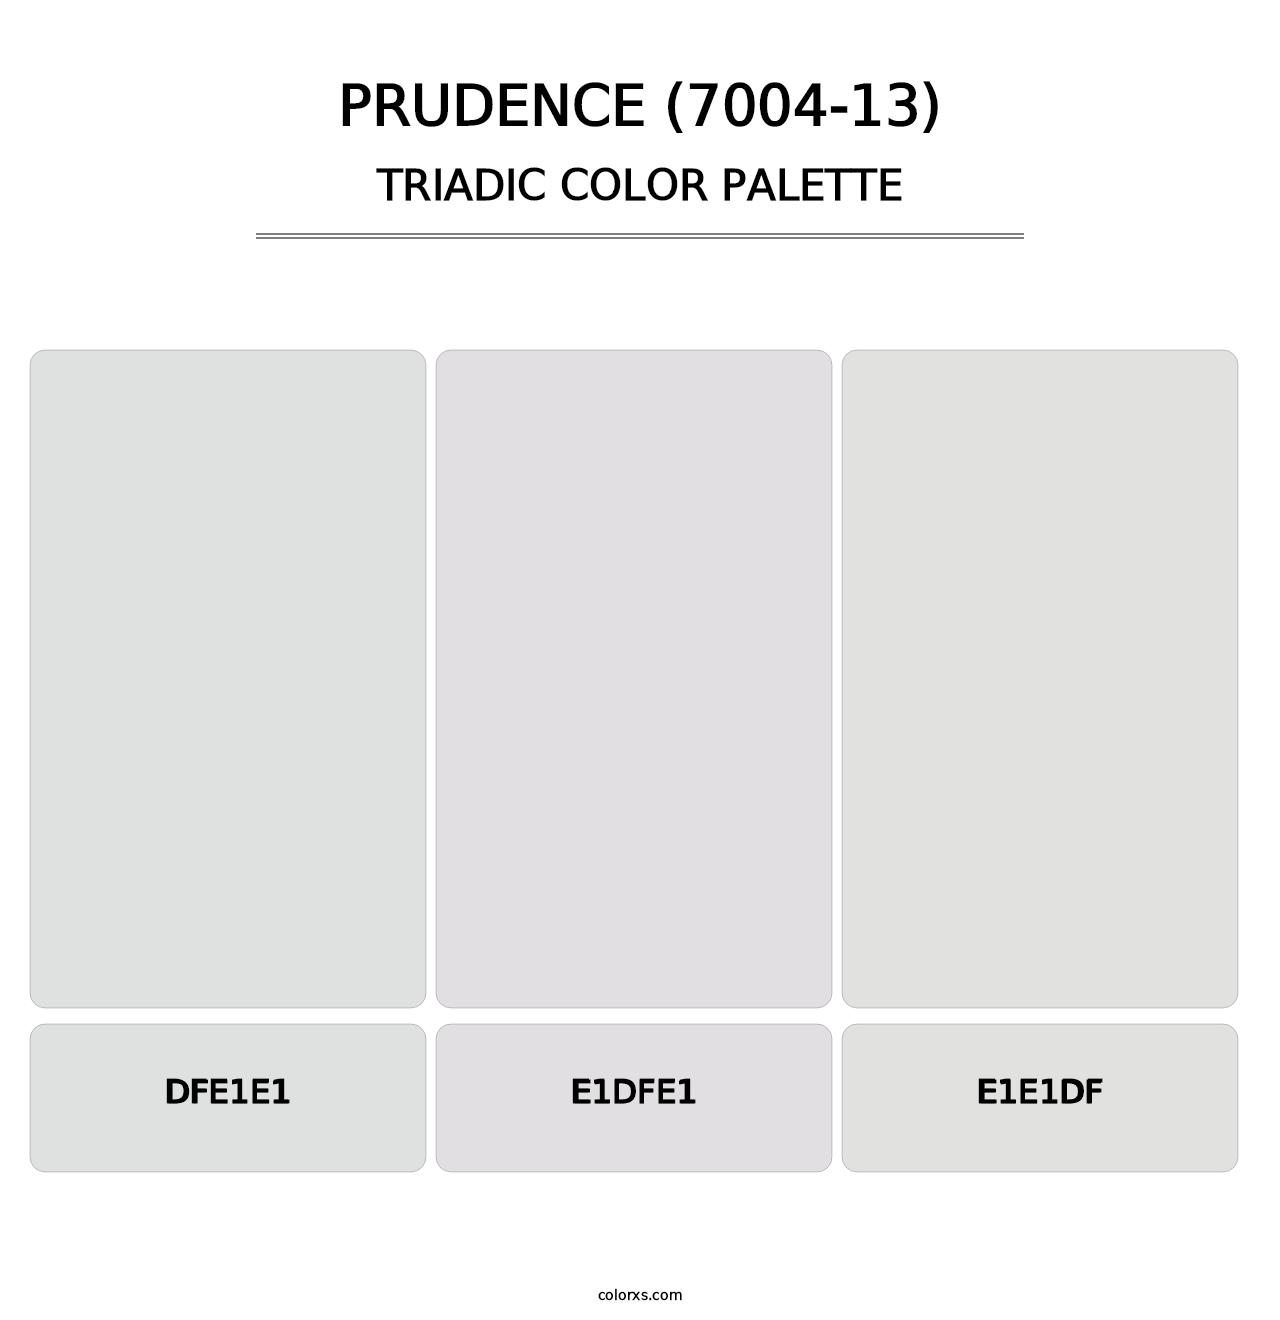 Prudence (7004-13) - Triadic Color Palette